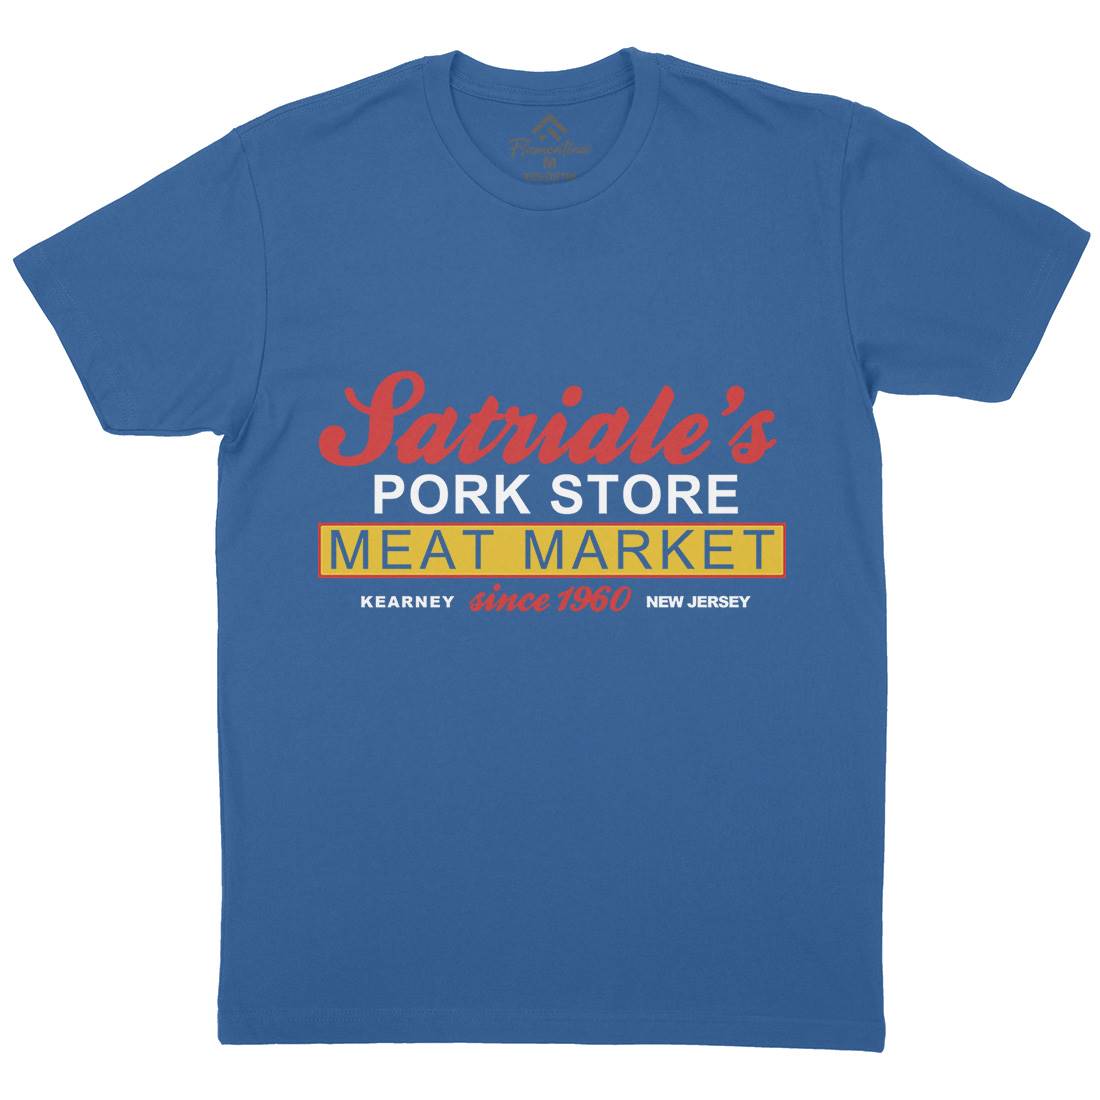 Satriale Meat Store Mens Organic Crew Neck T-Shirt Food D115